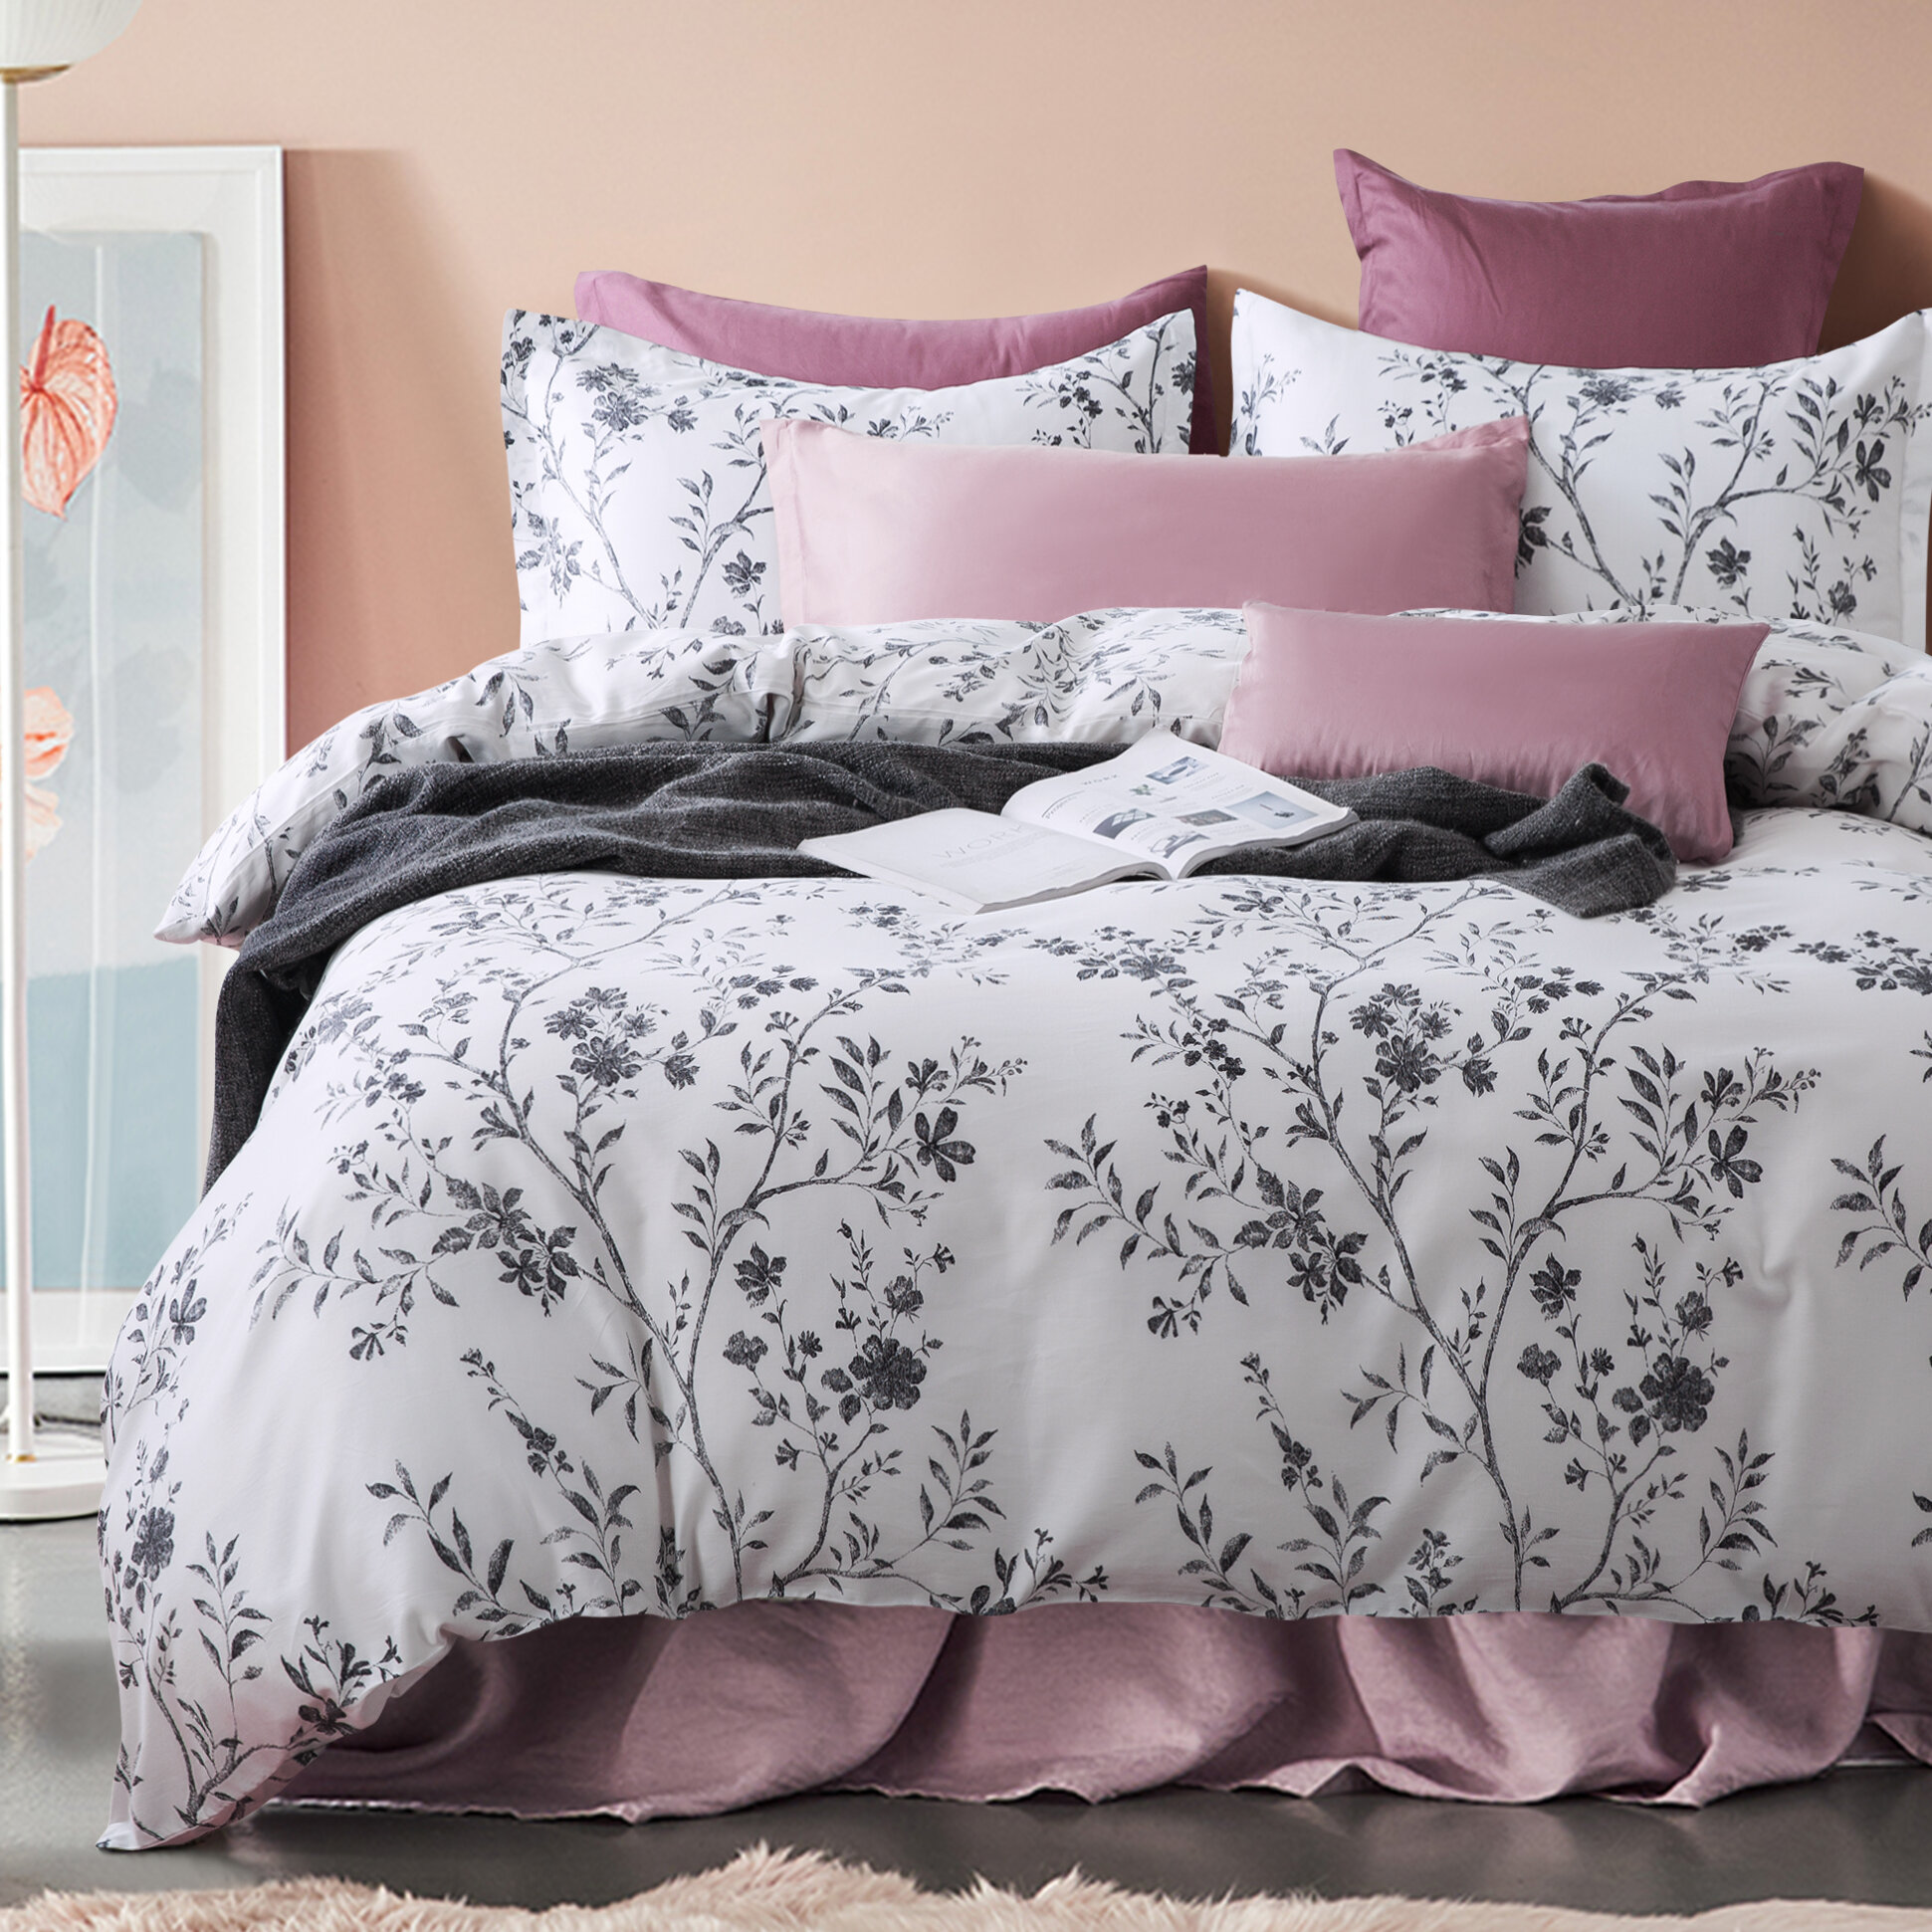 SINGLE SET Luxury 100% Cotton Bedspread Purple White Toile French Vintage New